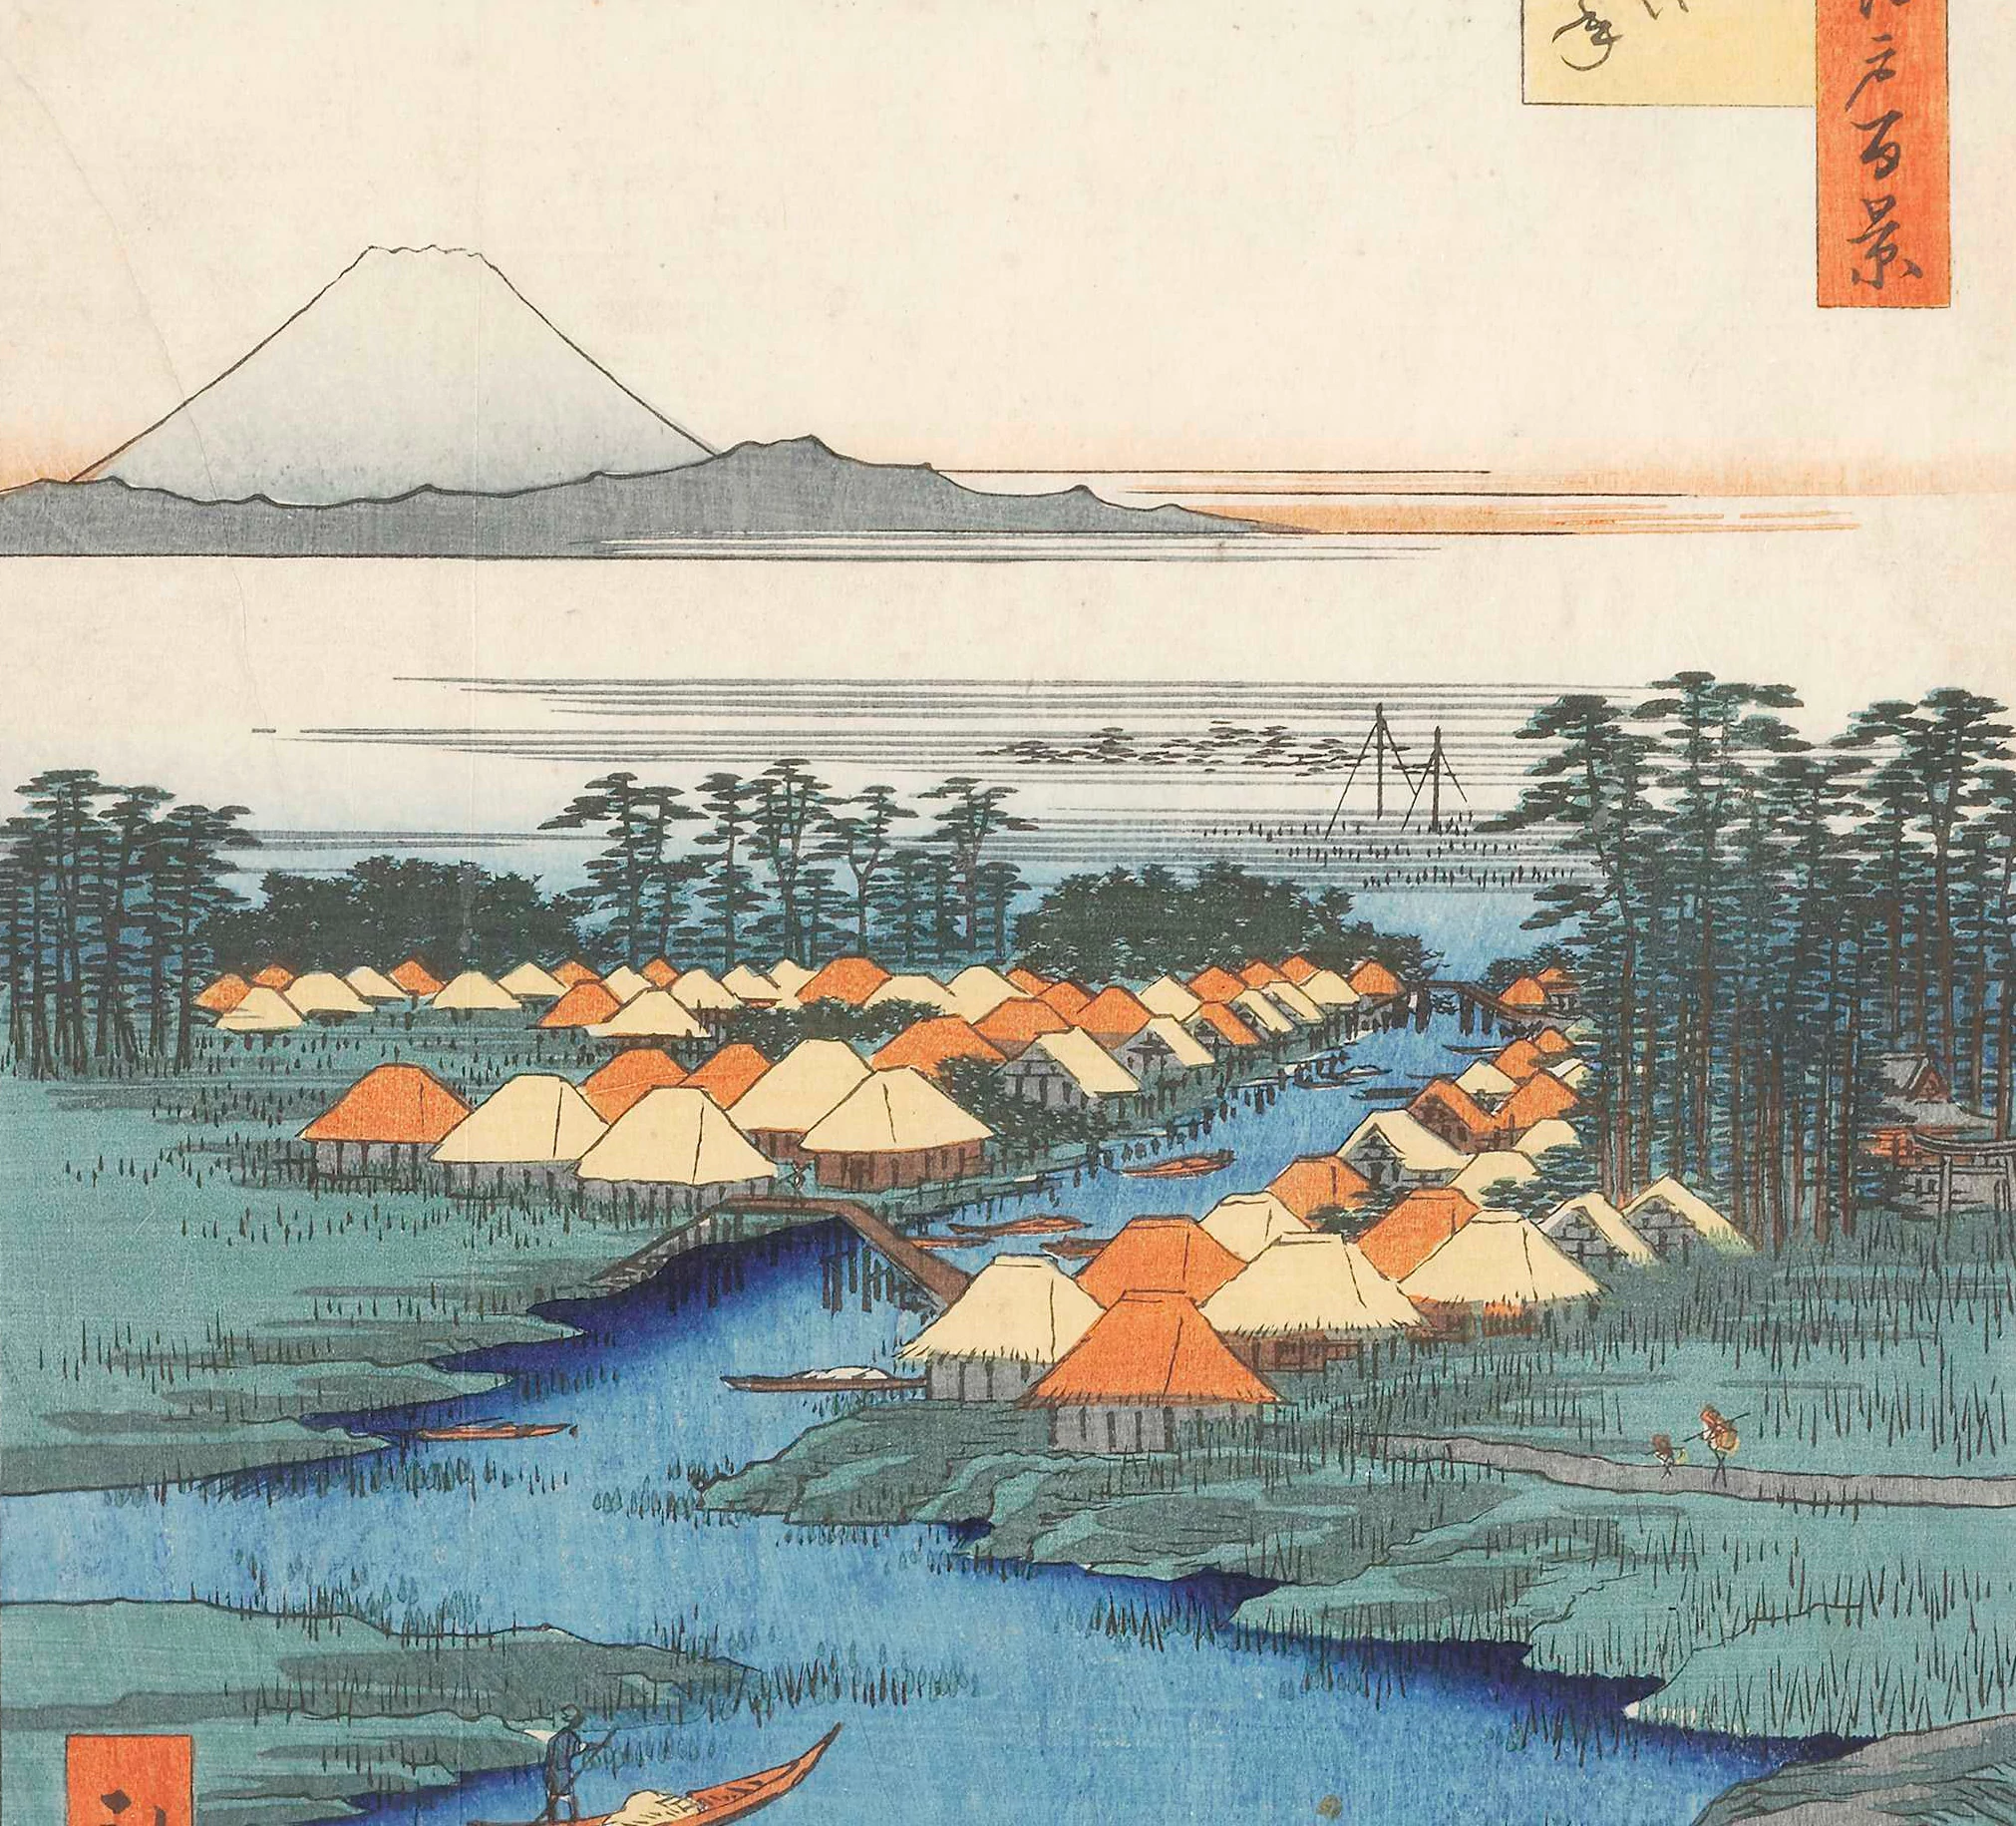 Edo Period, Age of Exploration